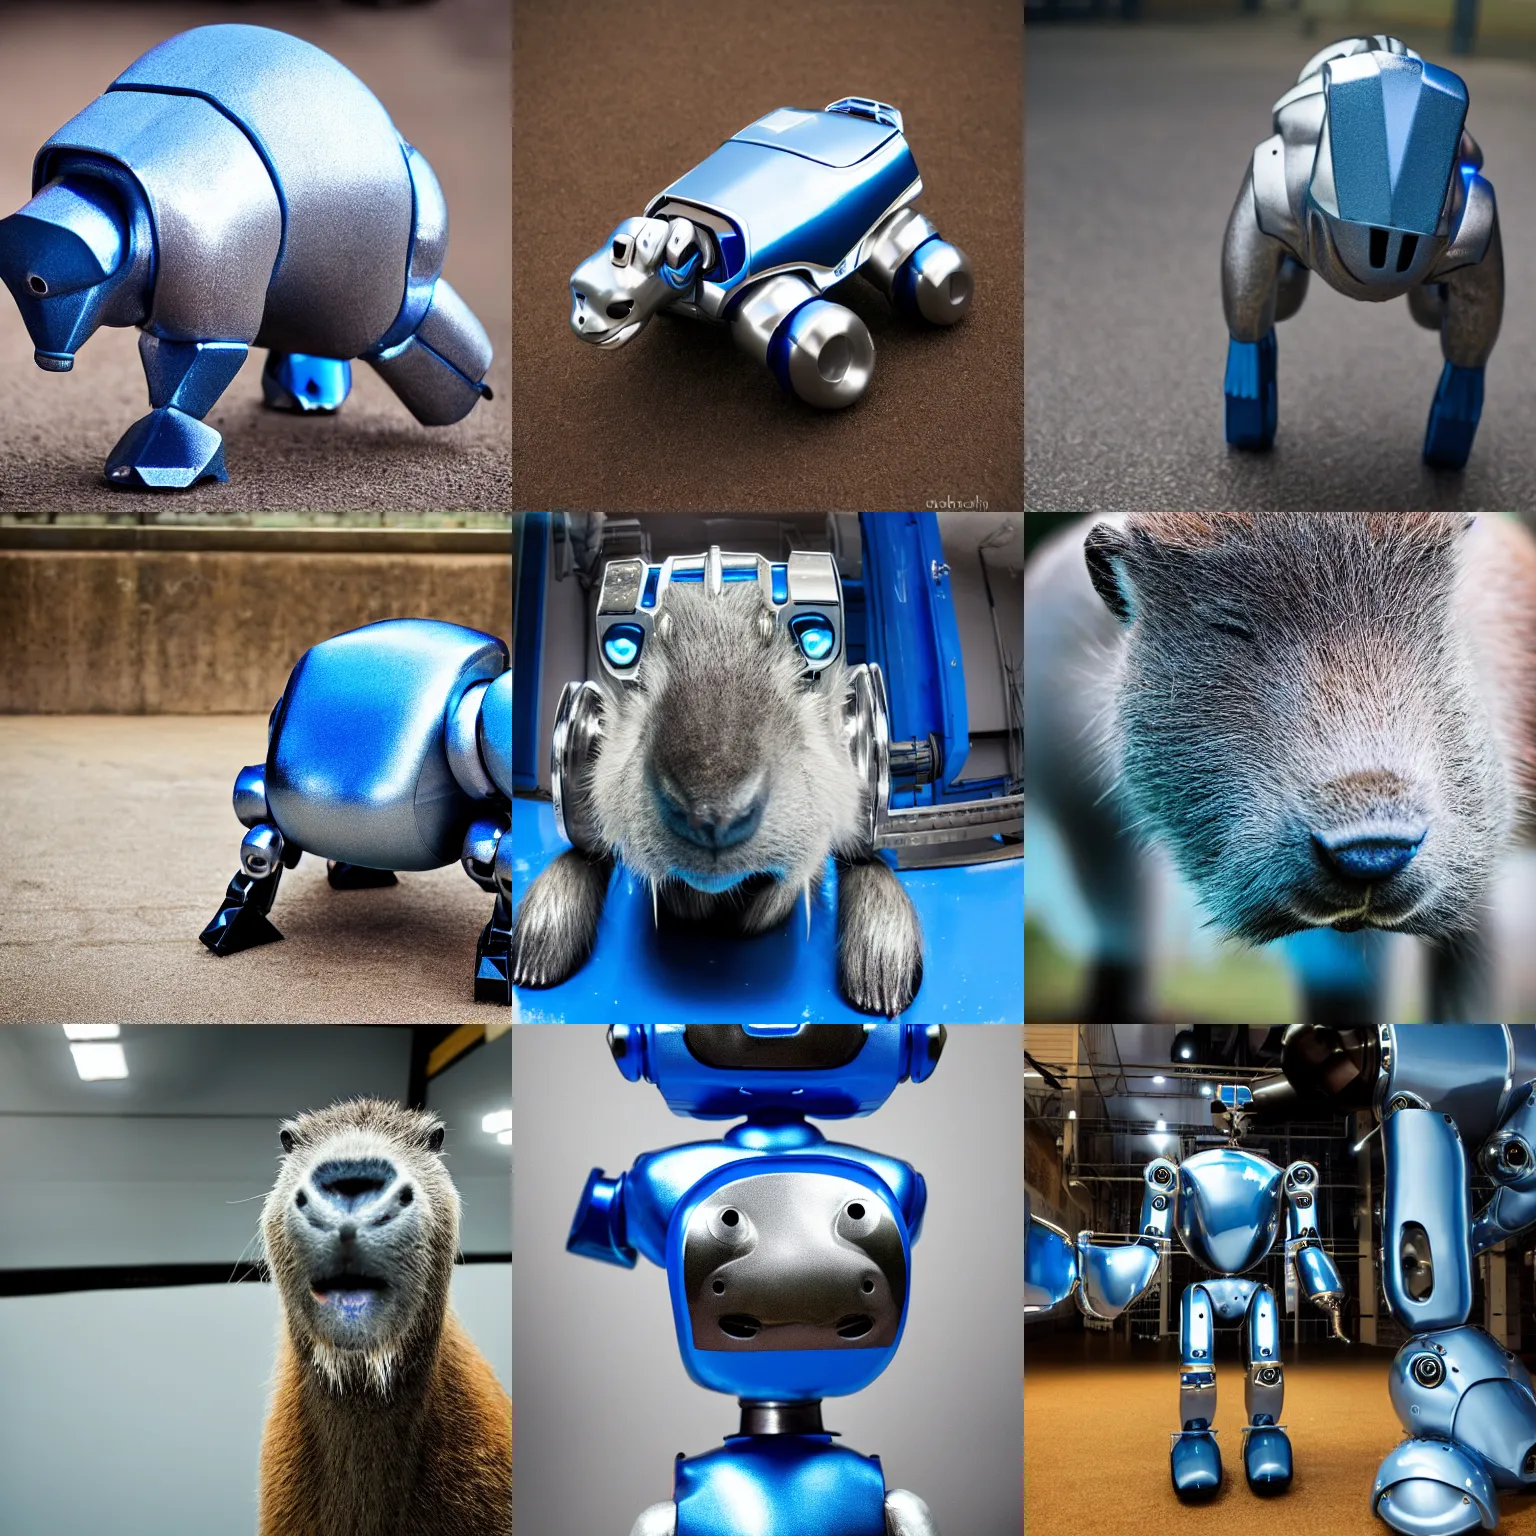 Prompt: metallic blue and silver robot capybara, robot photography